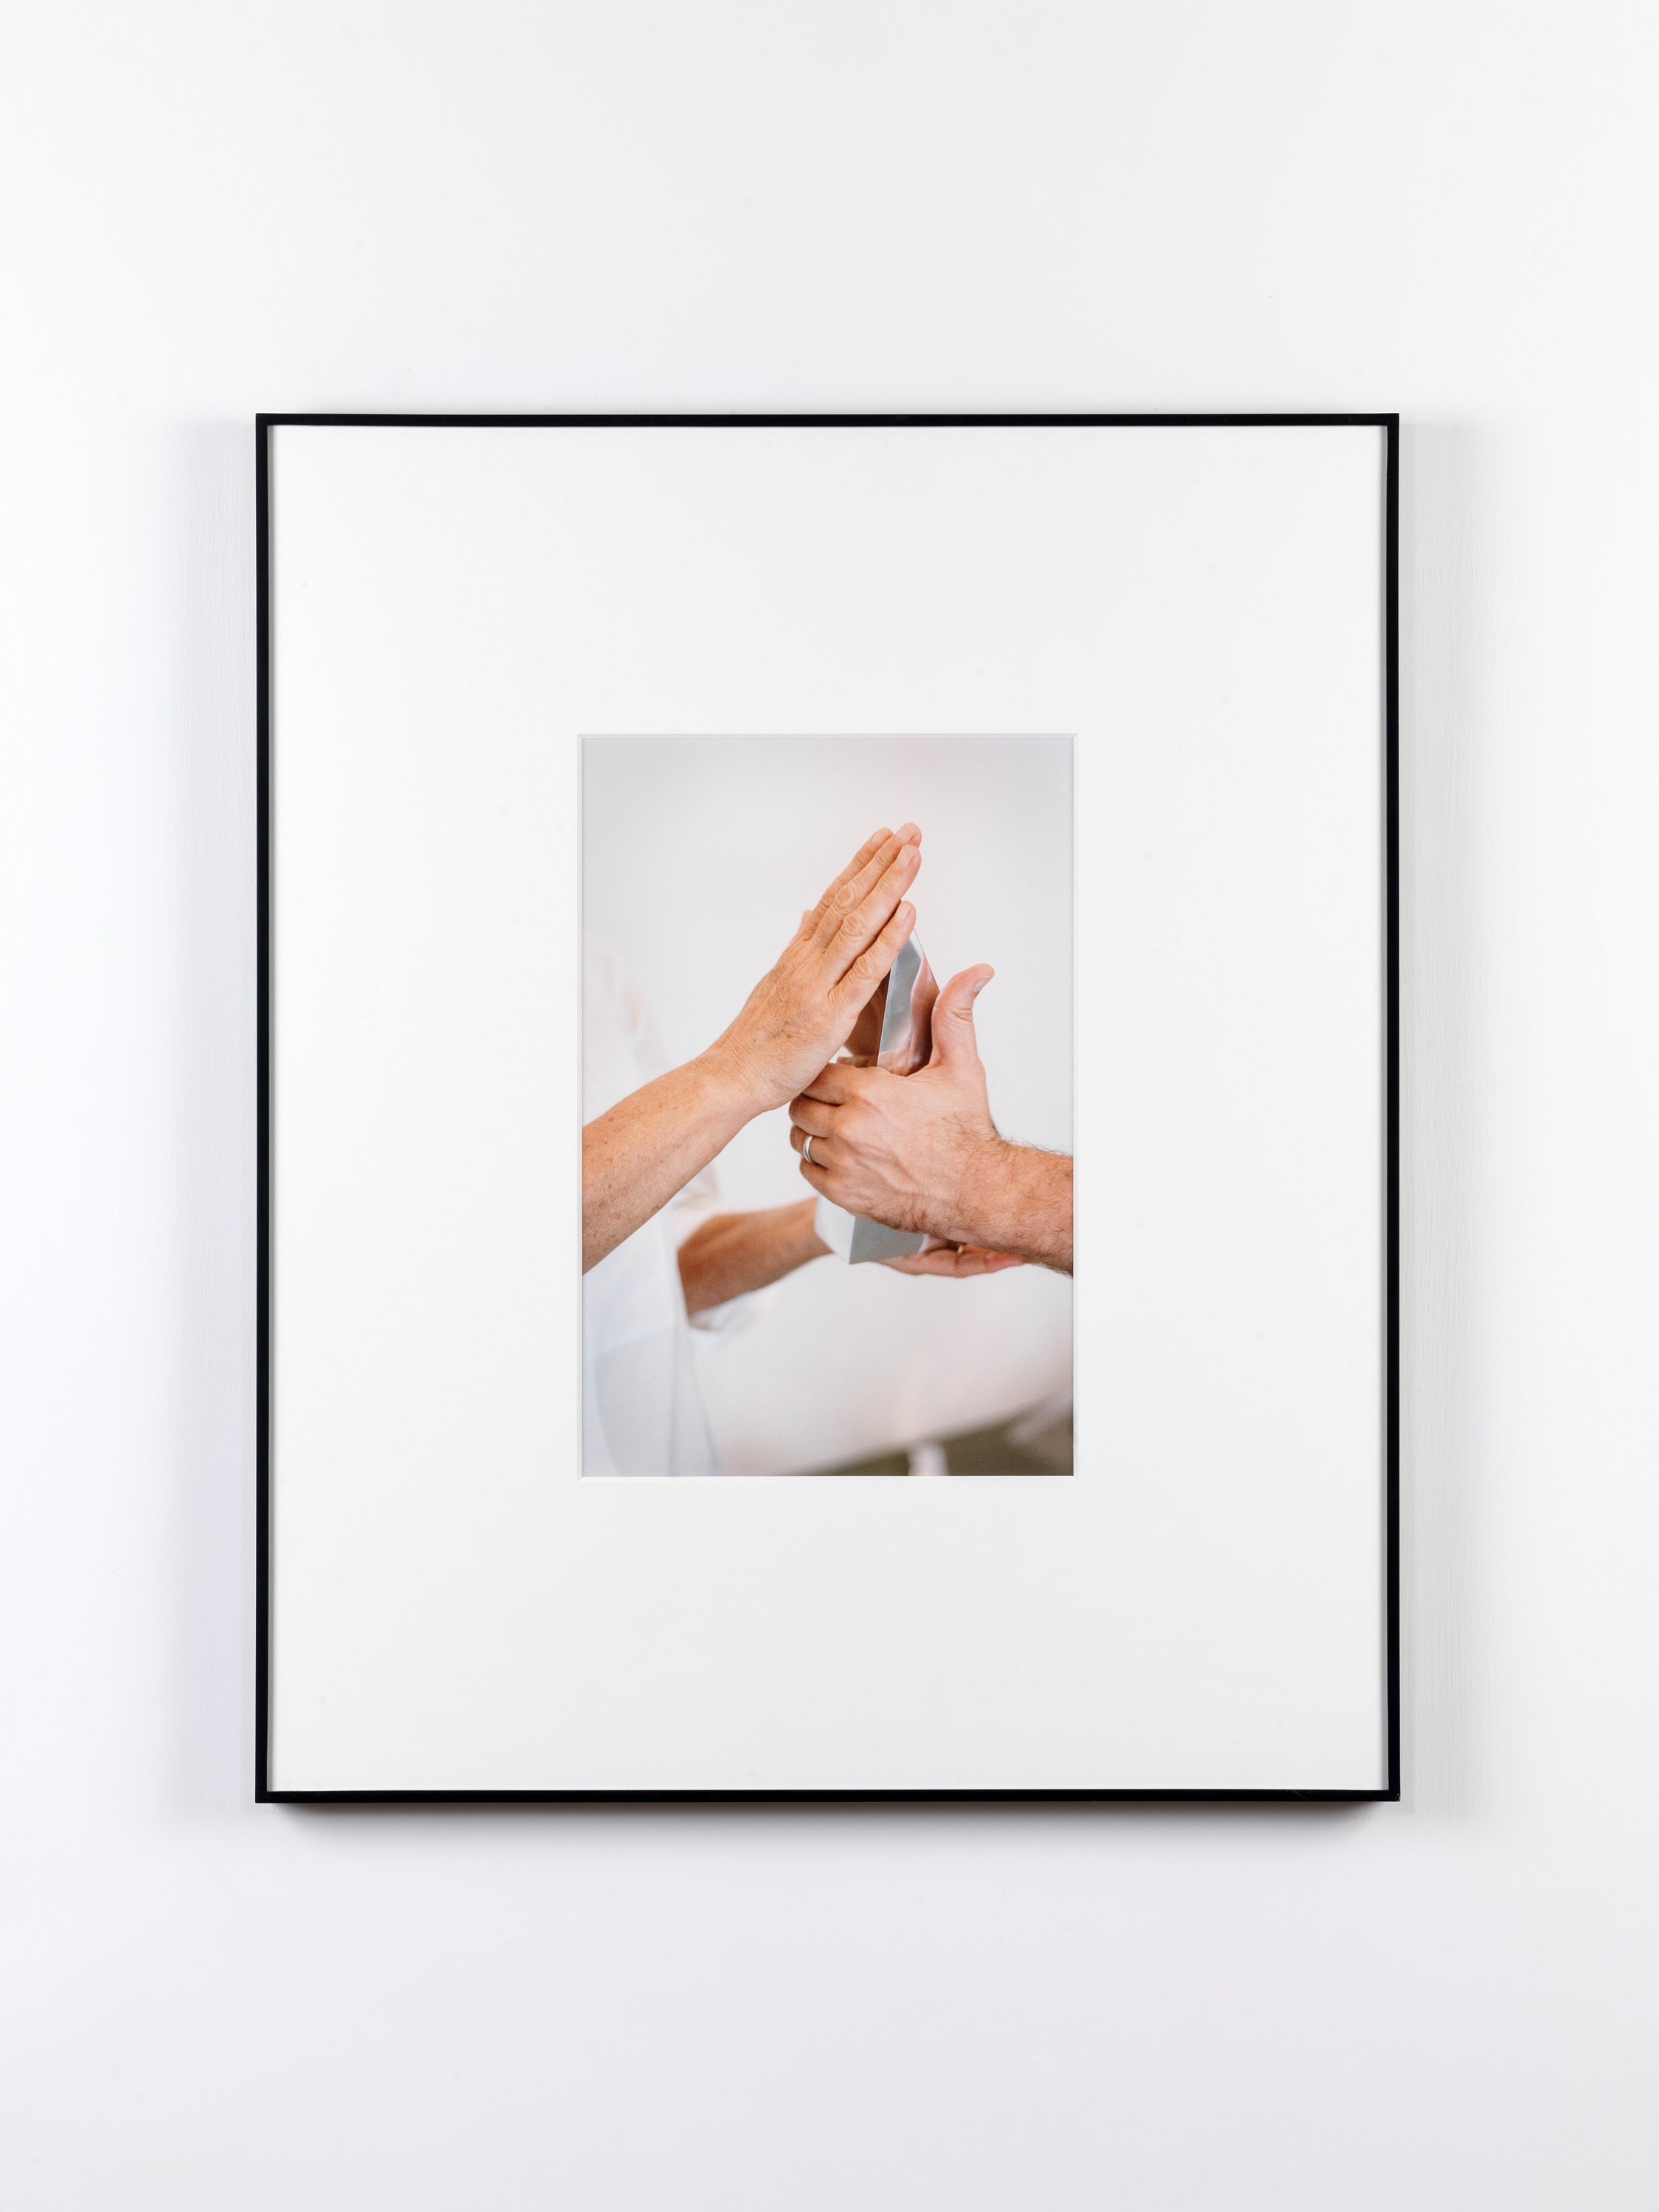   Los Angeles, California, April 4, 2014, Frame No. 7   2017  Chromogenic print  35 7/8 x 29 1/2 inches   Art Handling, 2011–   Exhibition:  Aggregato, 2018  